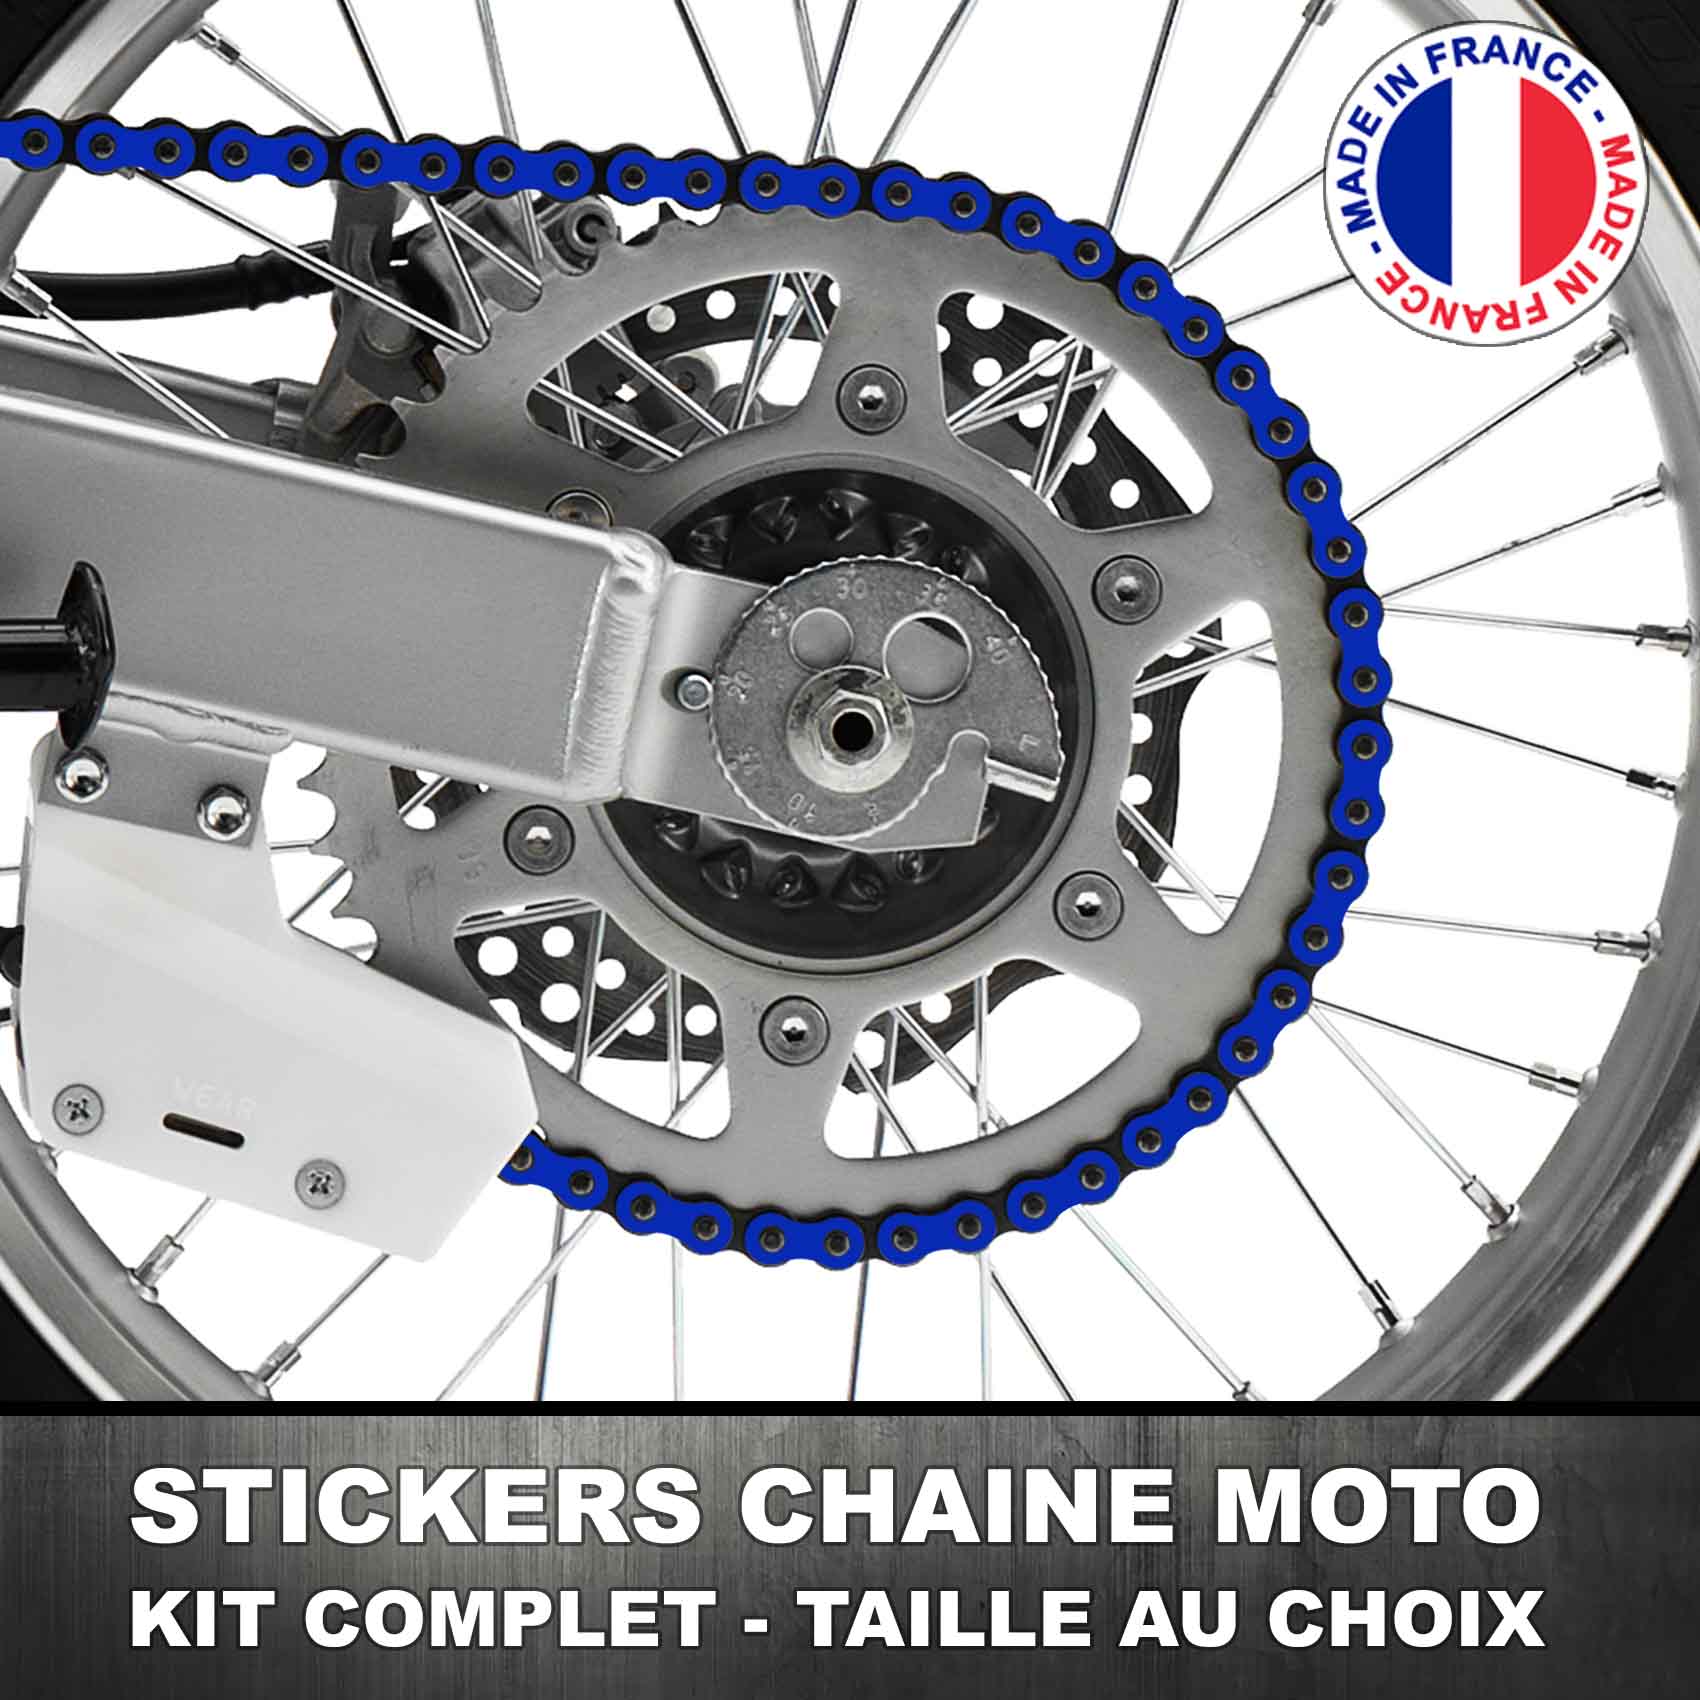 Stickers Chaine Moto Bleu